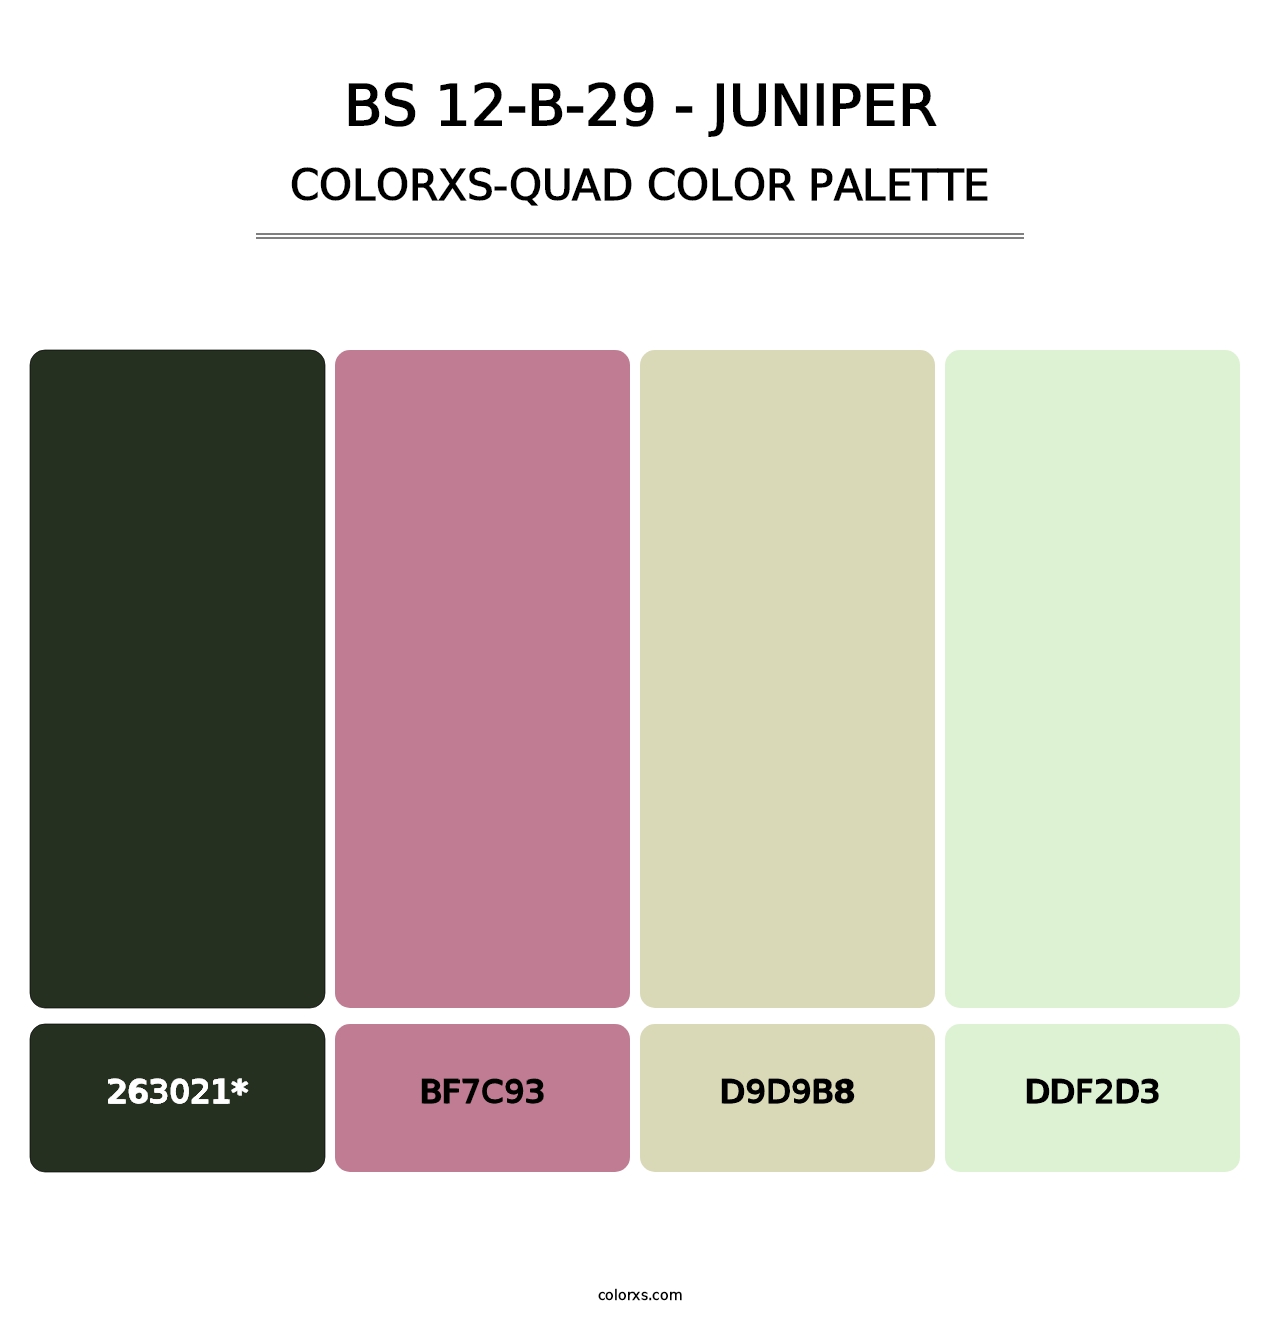 BS 12-B-29 - Juniper - Colorxs Quad Palette